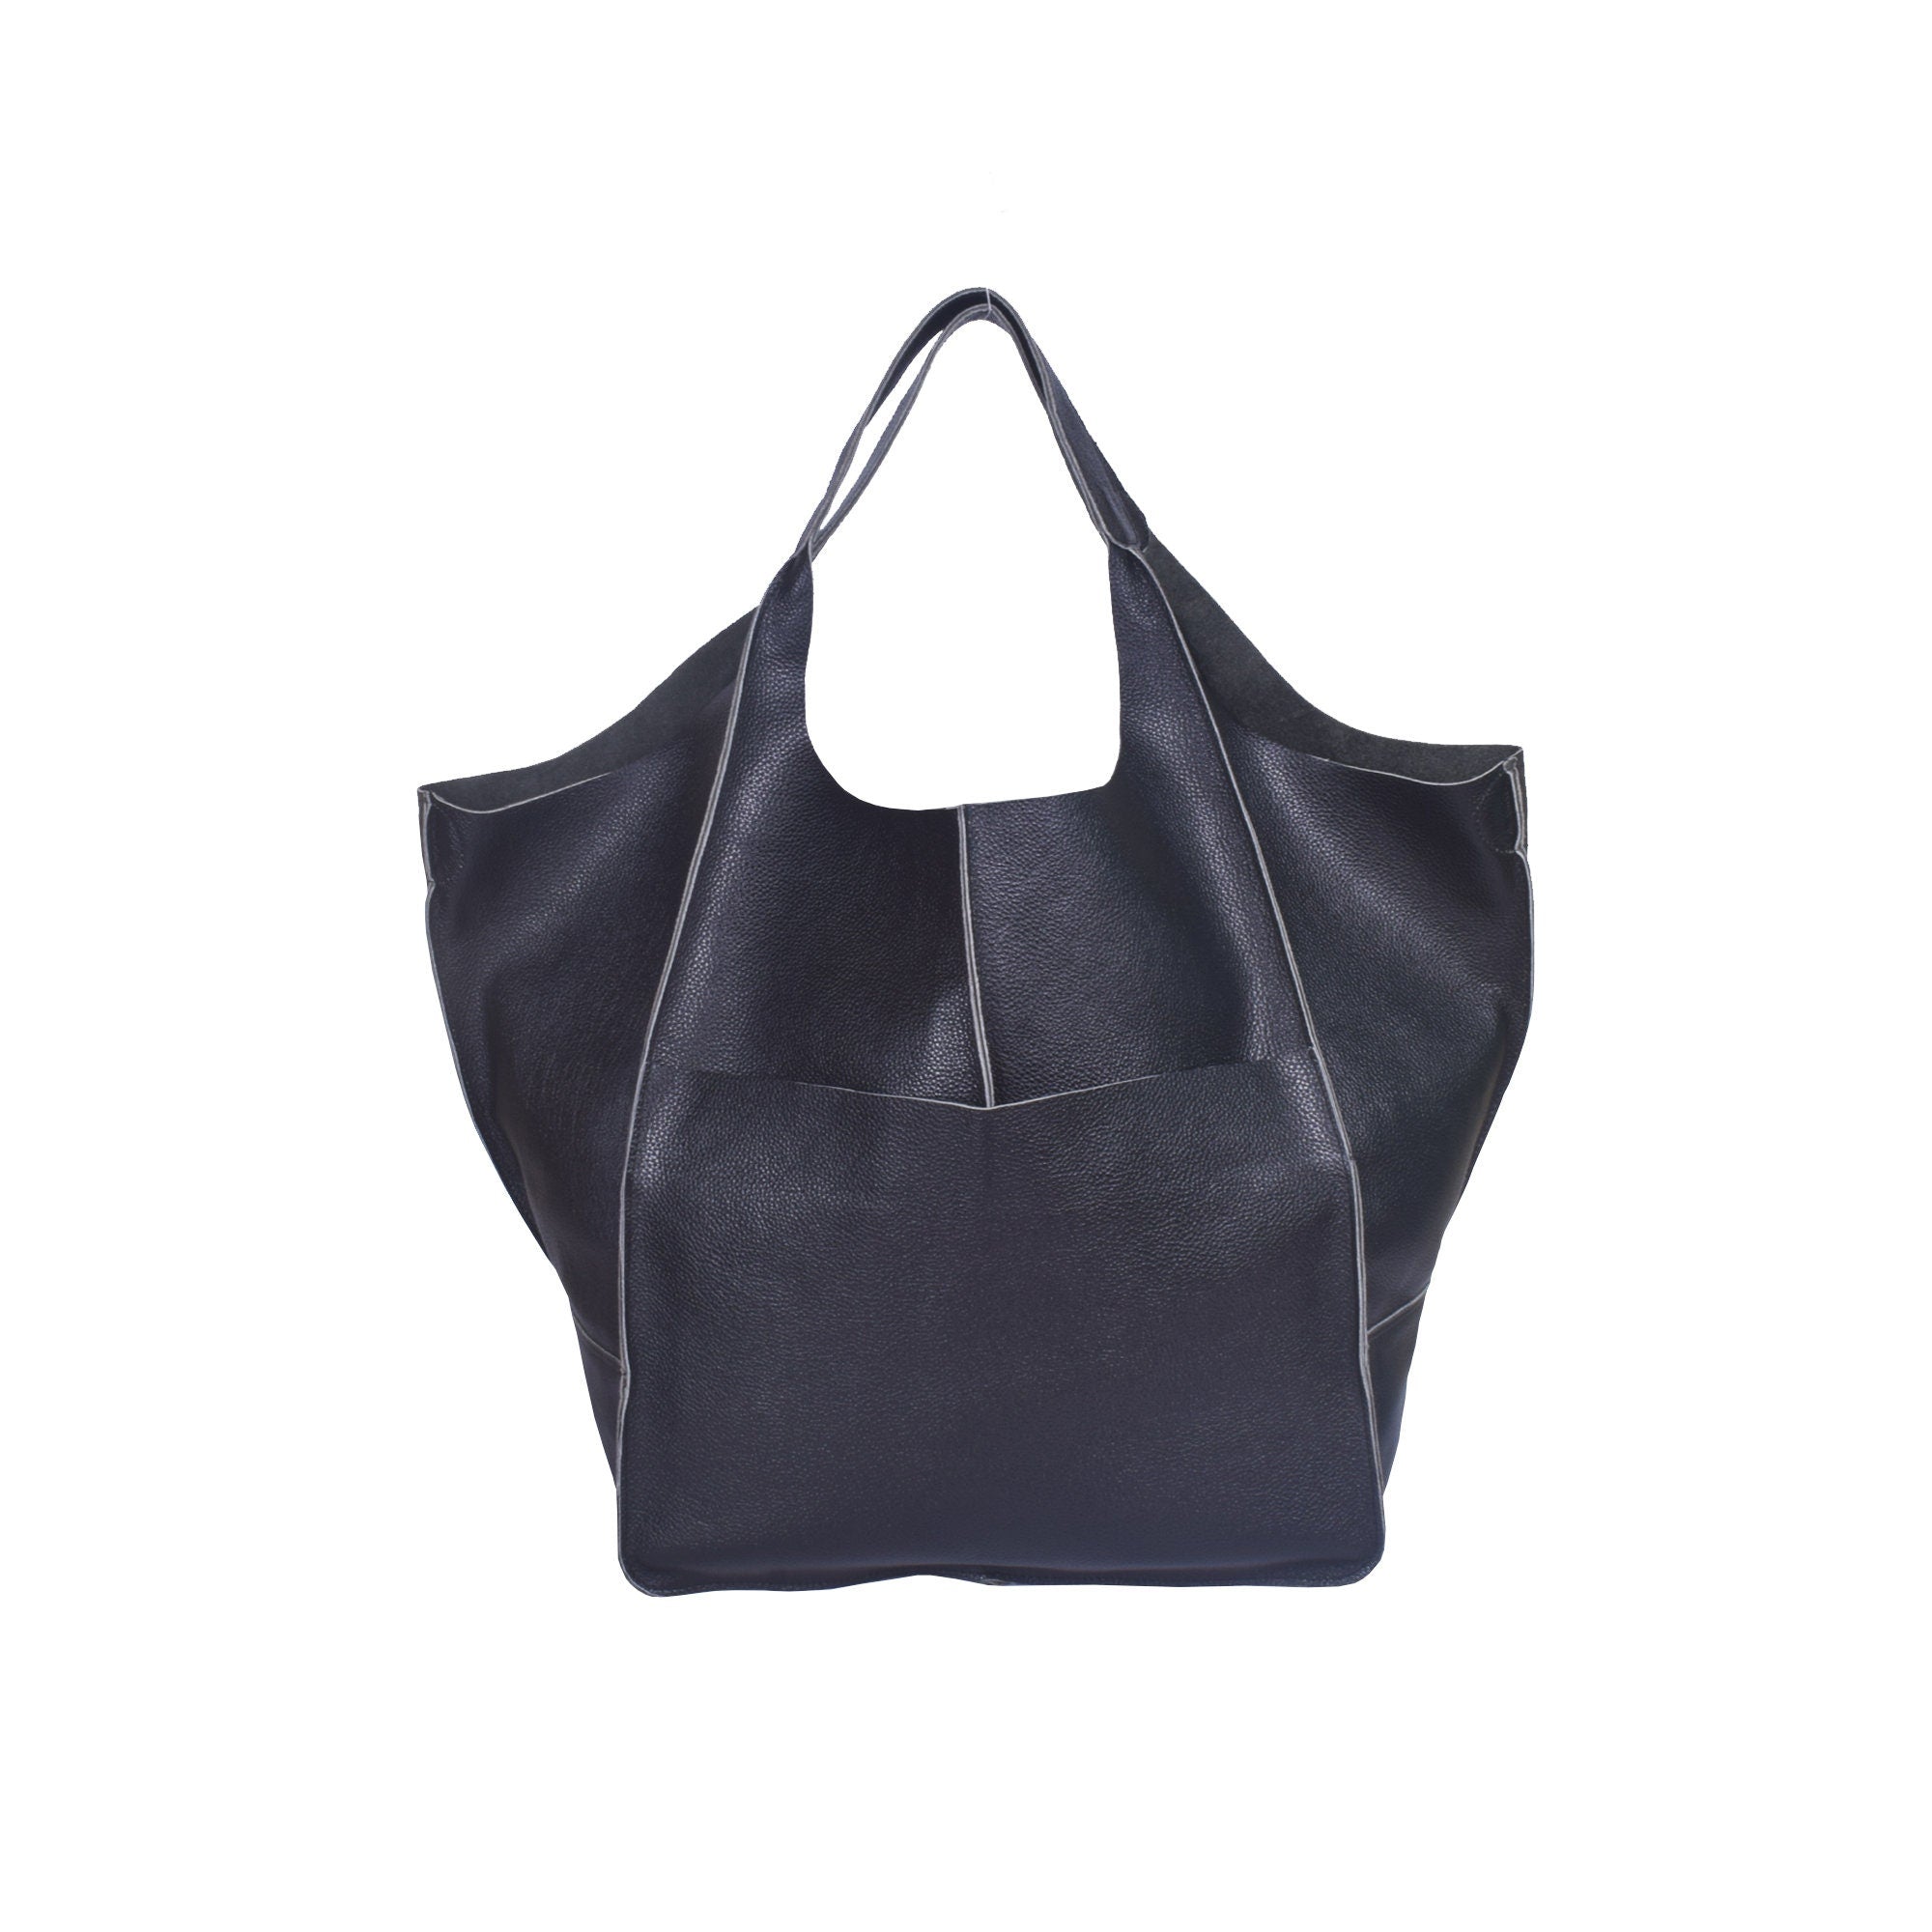 Buy Pahajim Womens Large Leather Bucket Tote Bags Tote Purses Top Handle  Satchel Handbags for Women (Fuchsia) at Amazon.in